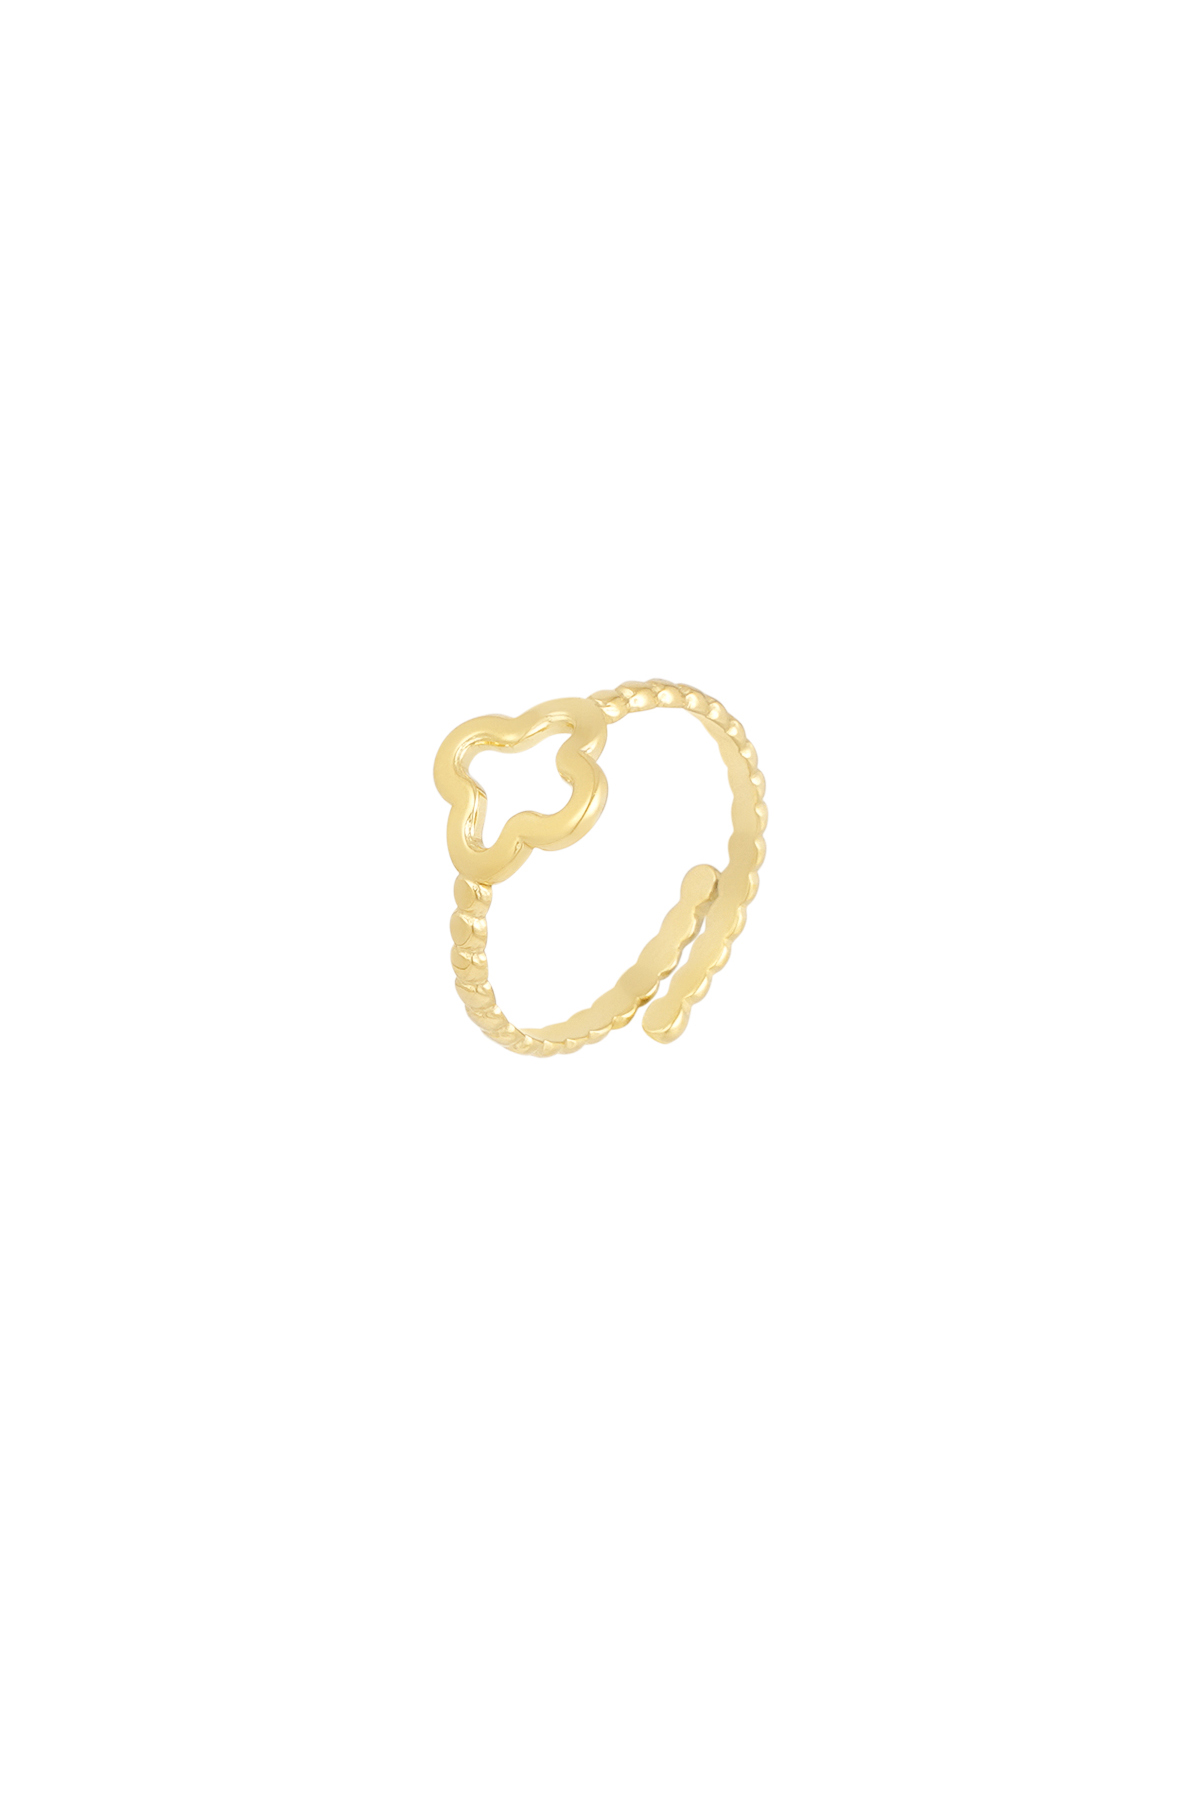 Gedrehter Ring mit Kleeblatt - gold 